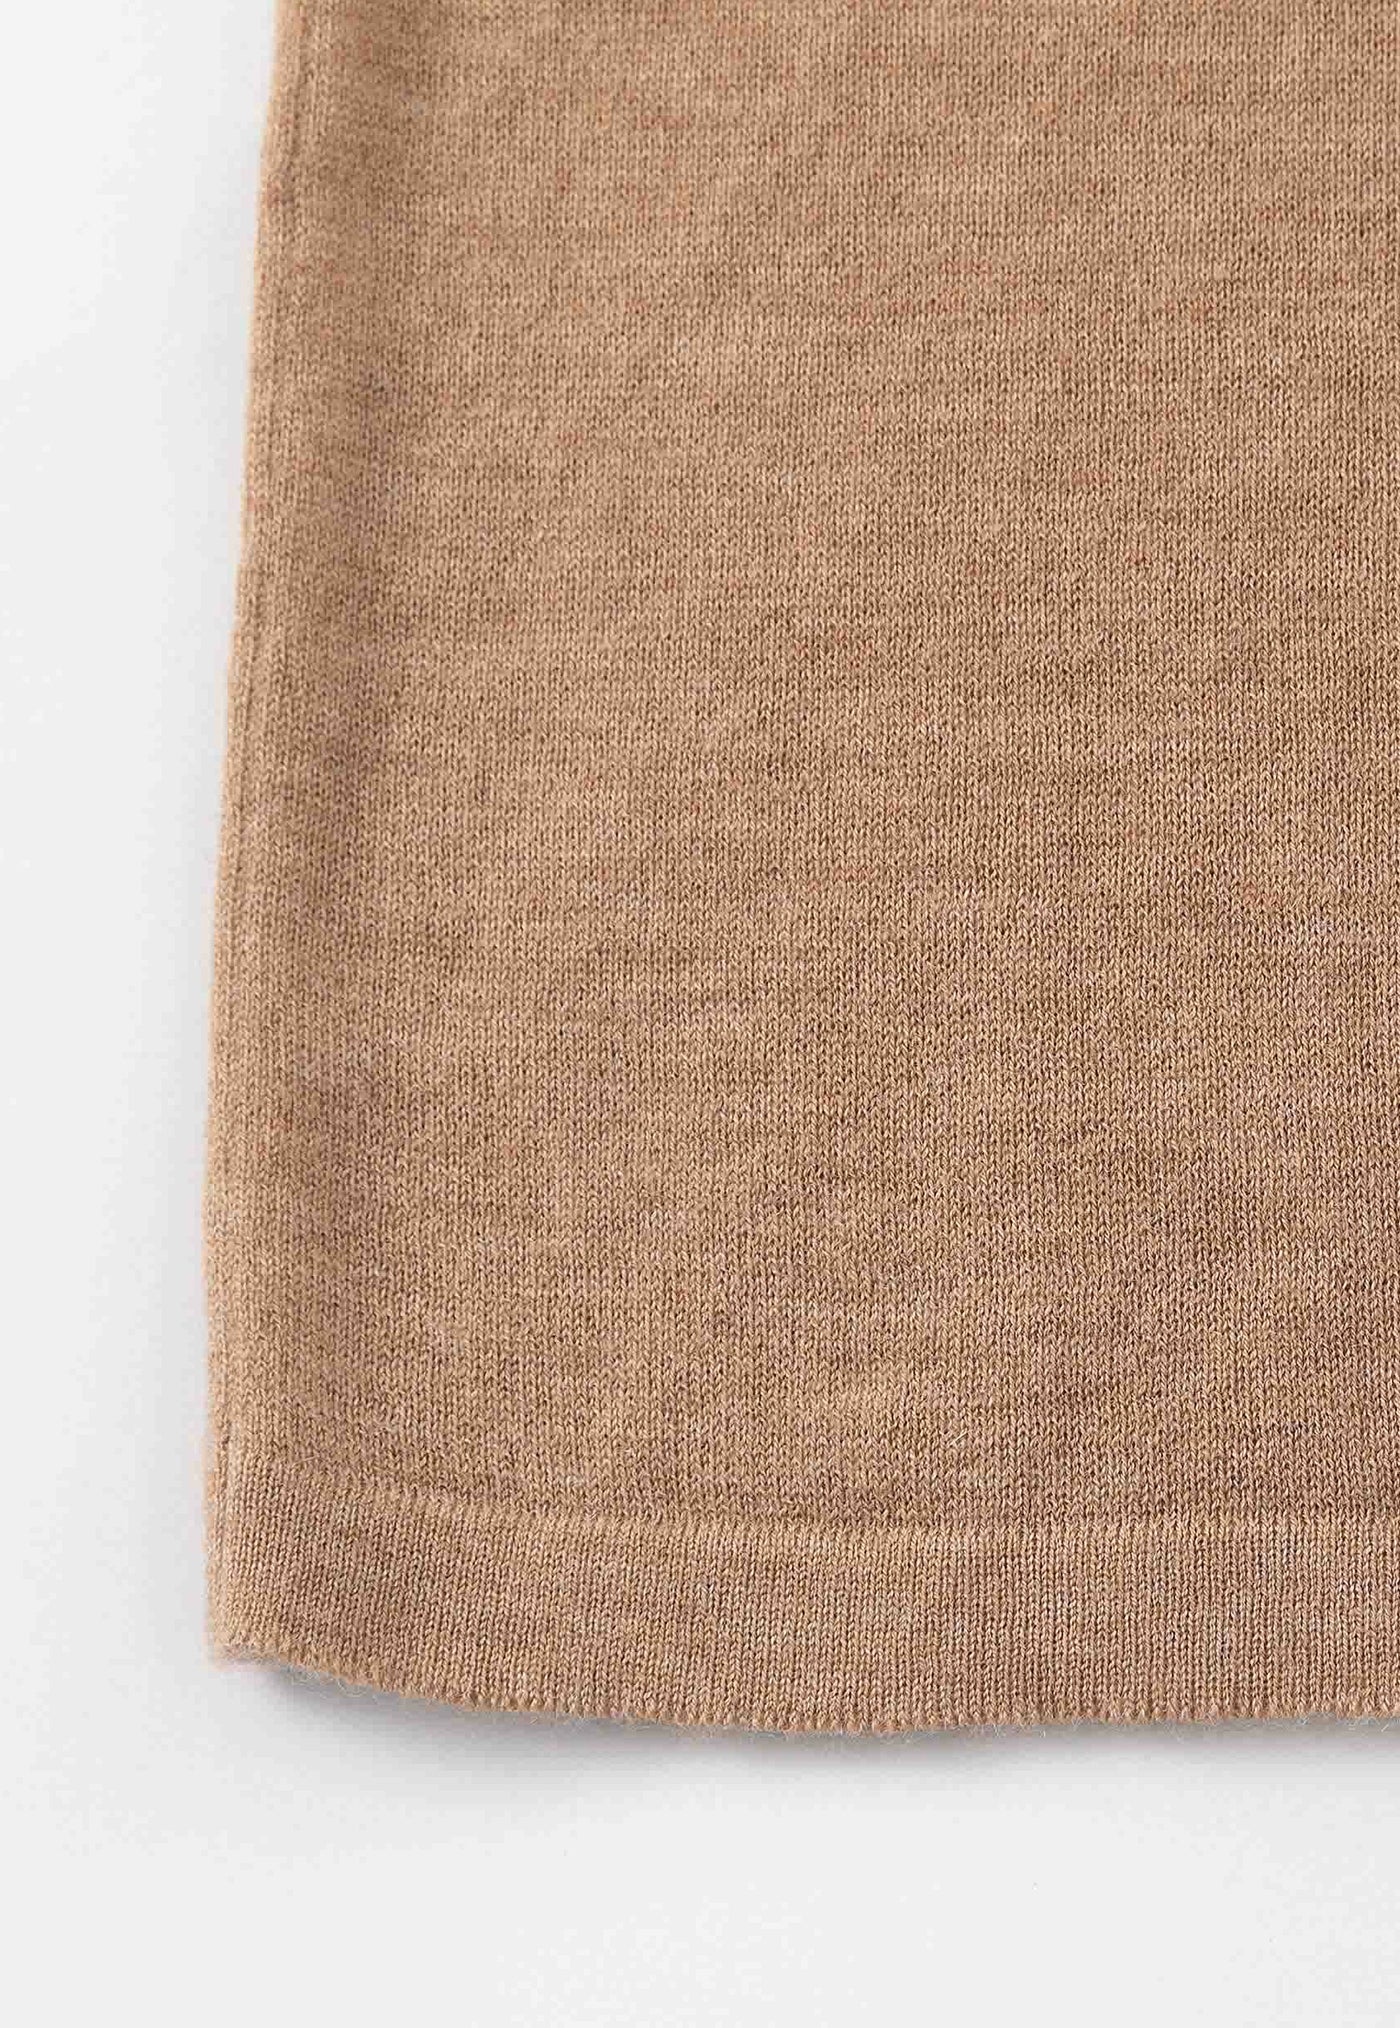 N.33 Wool/Cashmere Bell Sleeve Crew - Nutmeg sold by Angel Divine